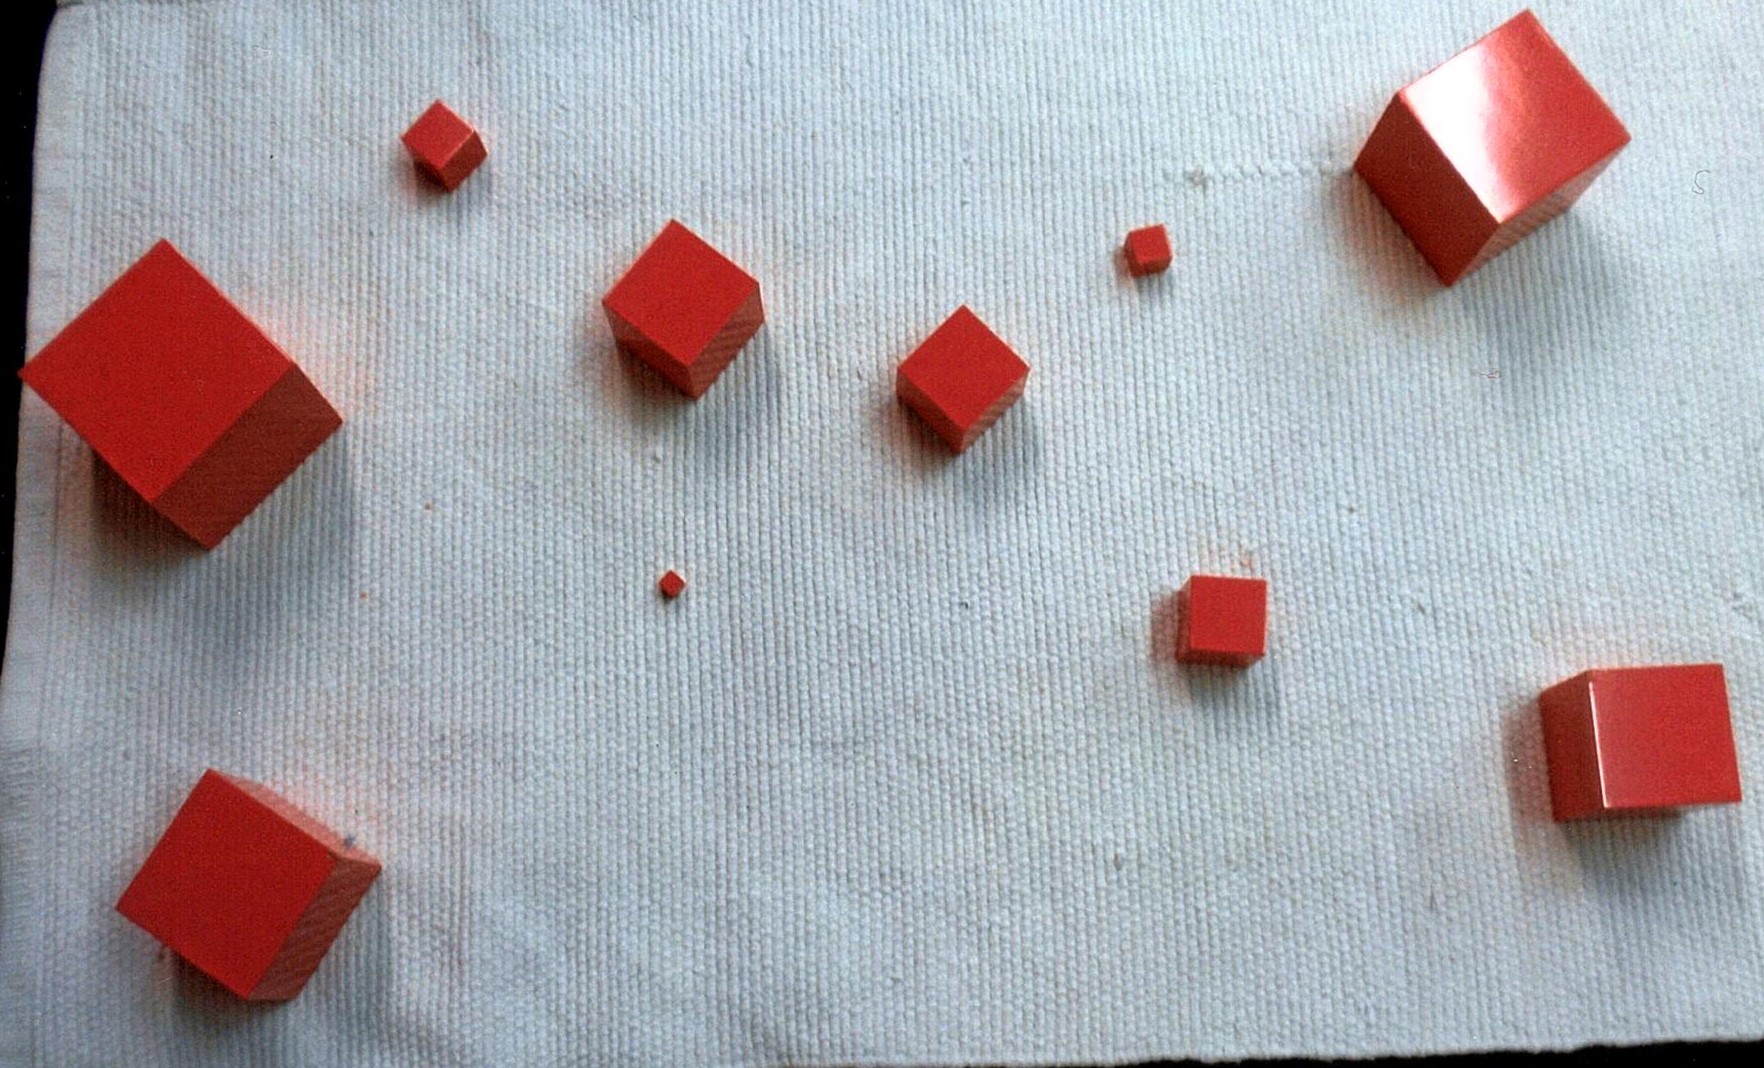 random grouping of cubes